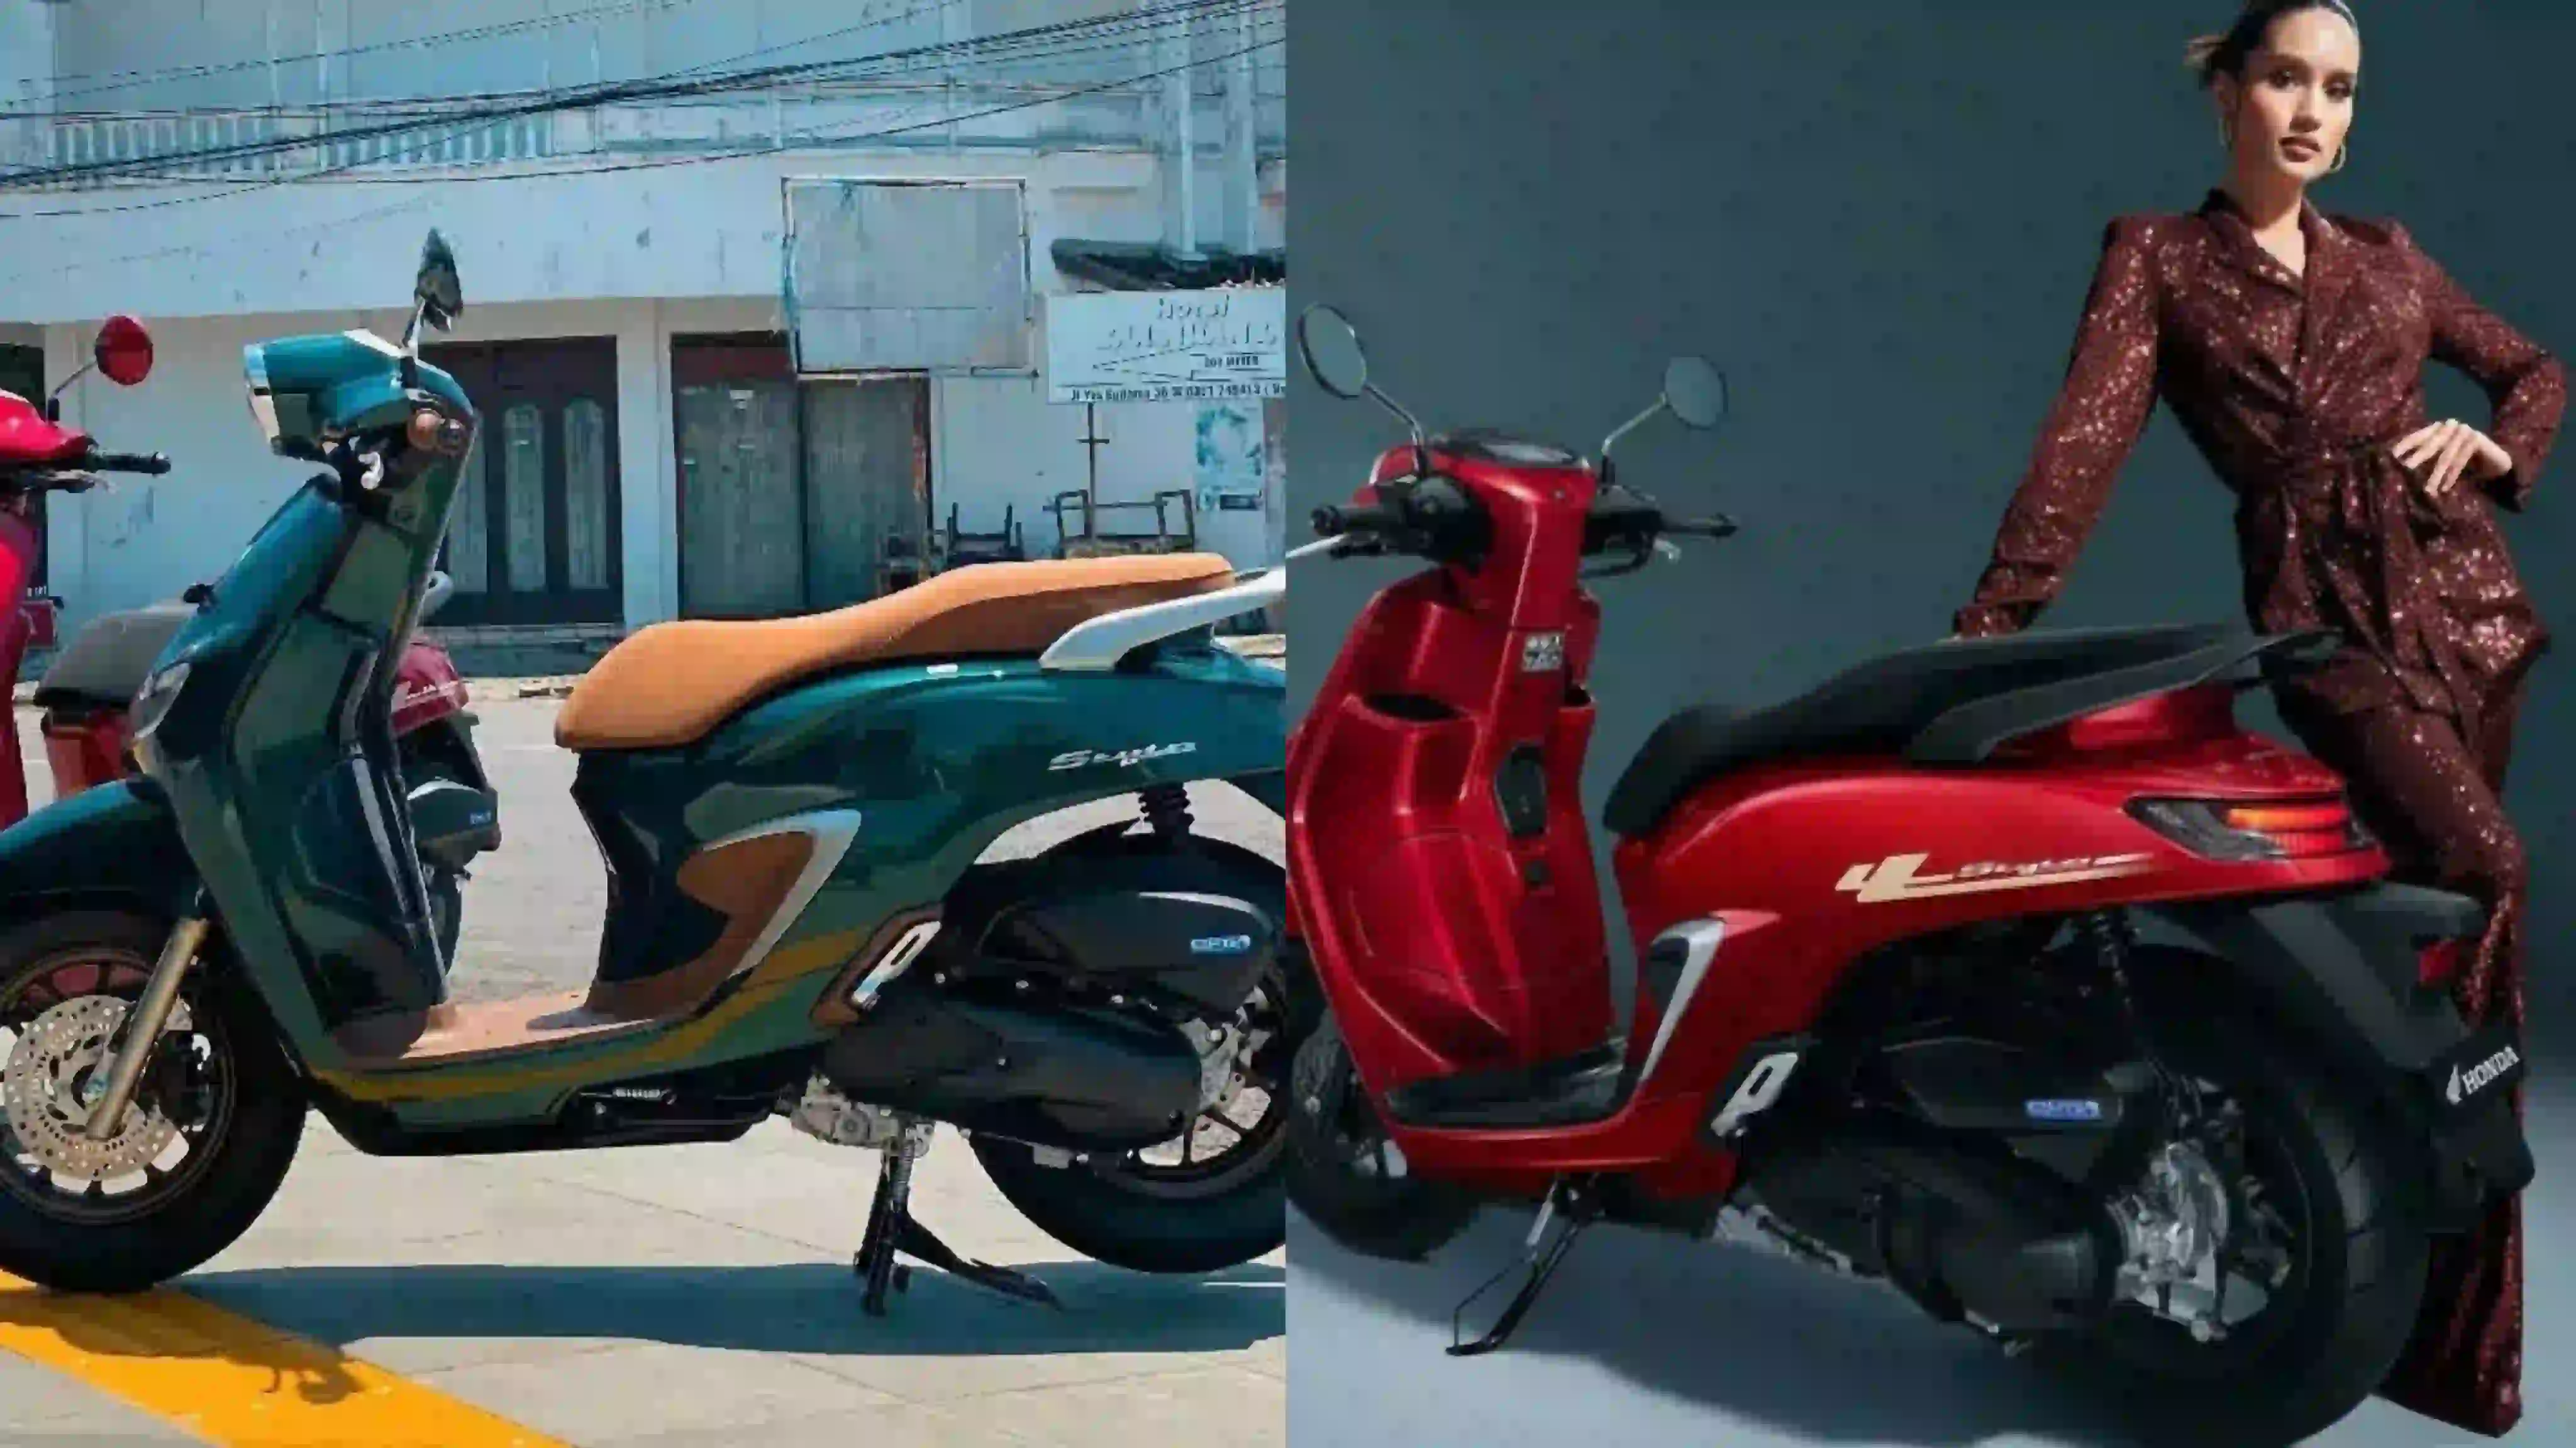 Mirip Vespa, Matic Baru Honda Ini Diklaim Irit Meski Punya Tenaga Bongsor